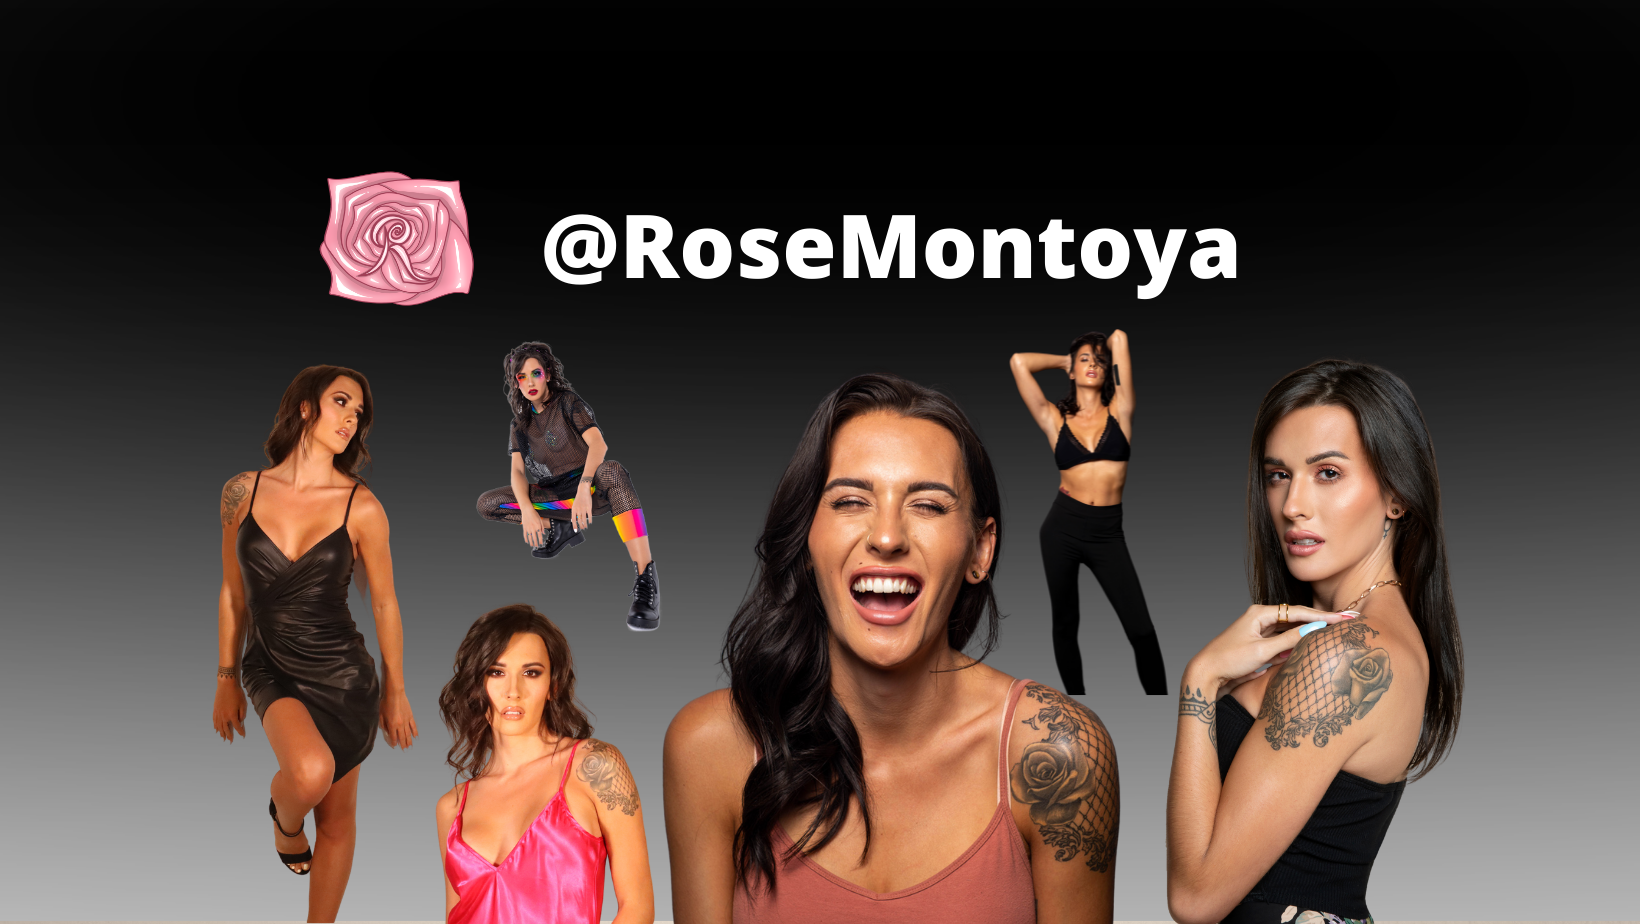 Rose montoya topless pics